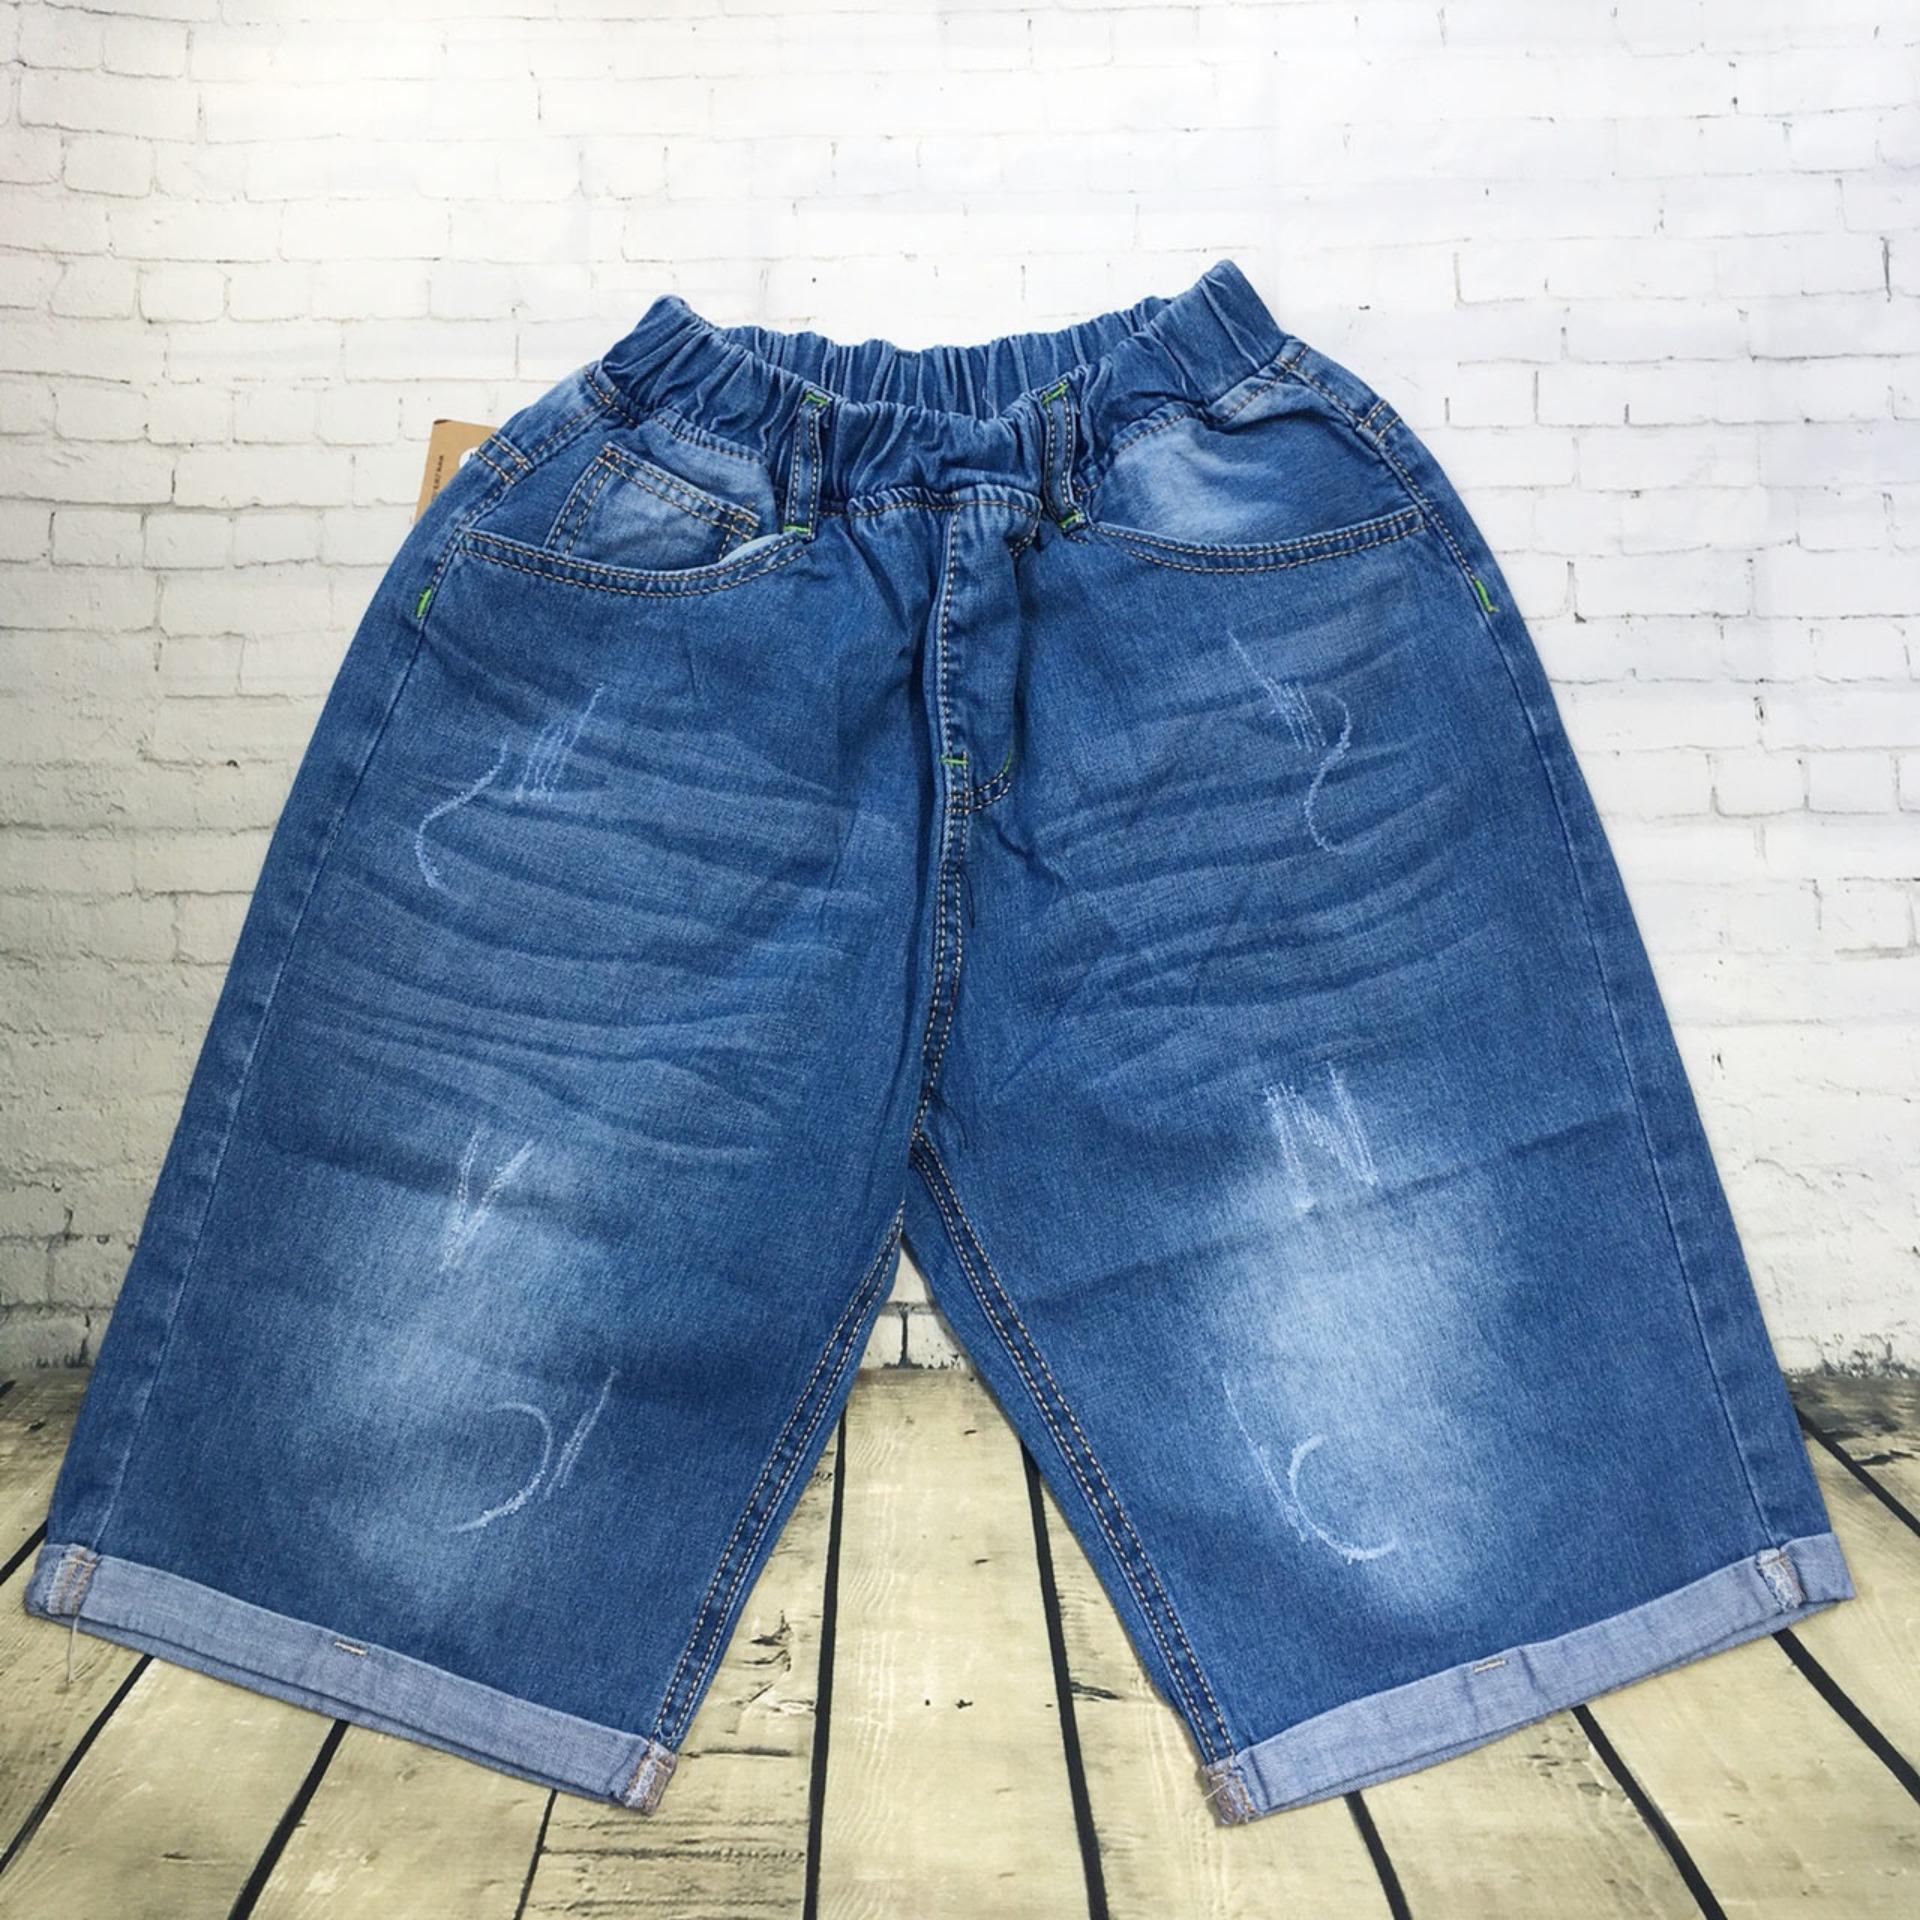 Quần lửng jeans lật lai lưng thun size cồ từ 38kg đến 65kg - QT235